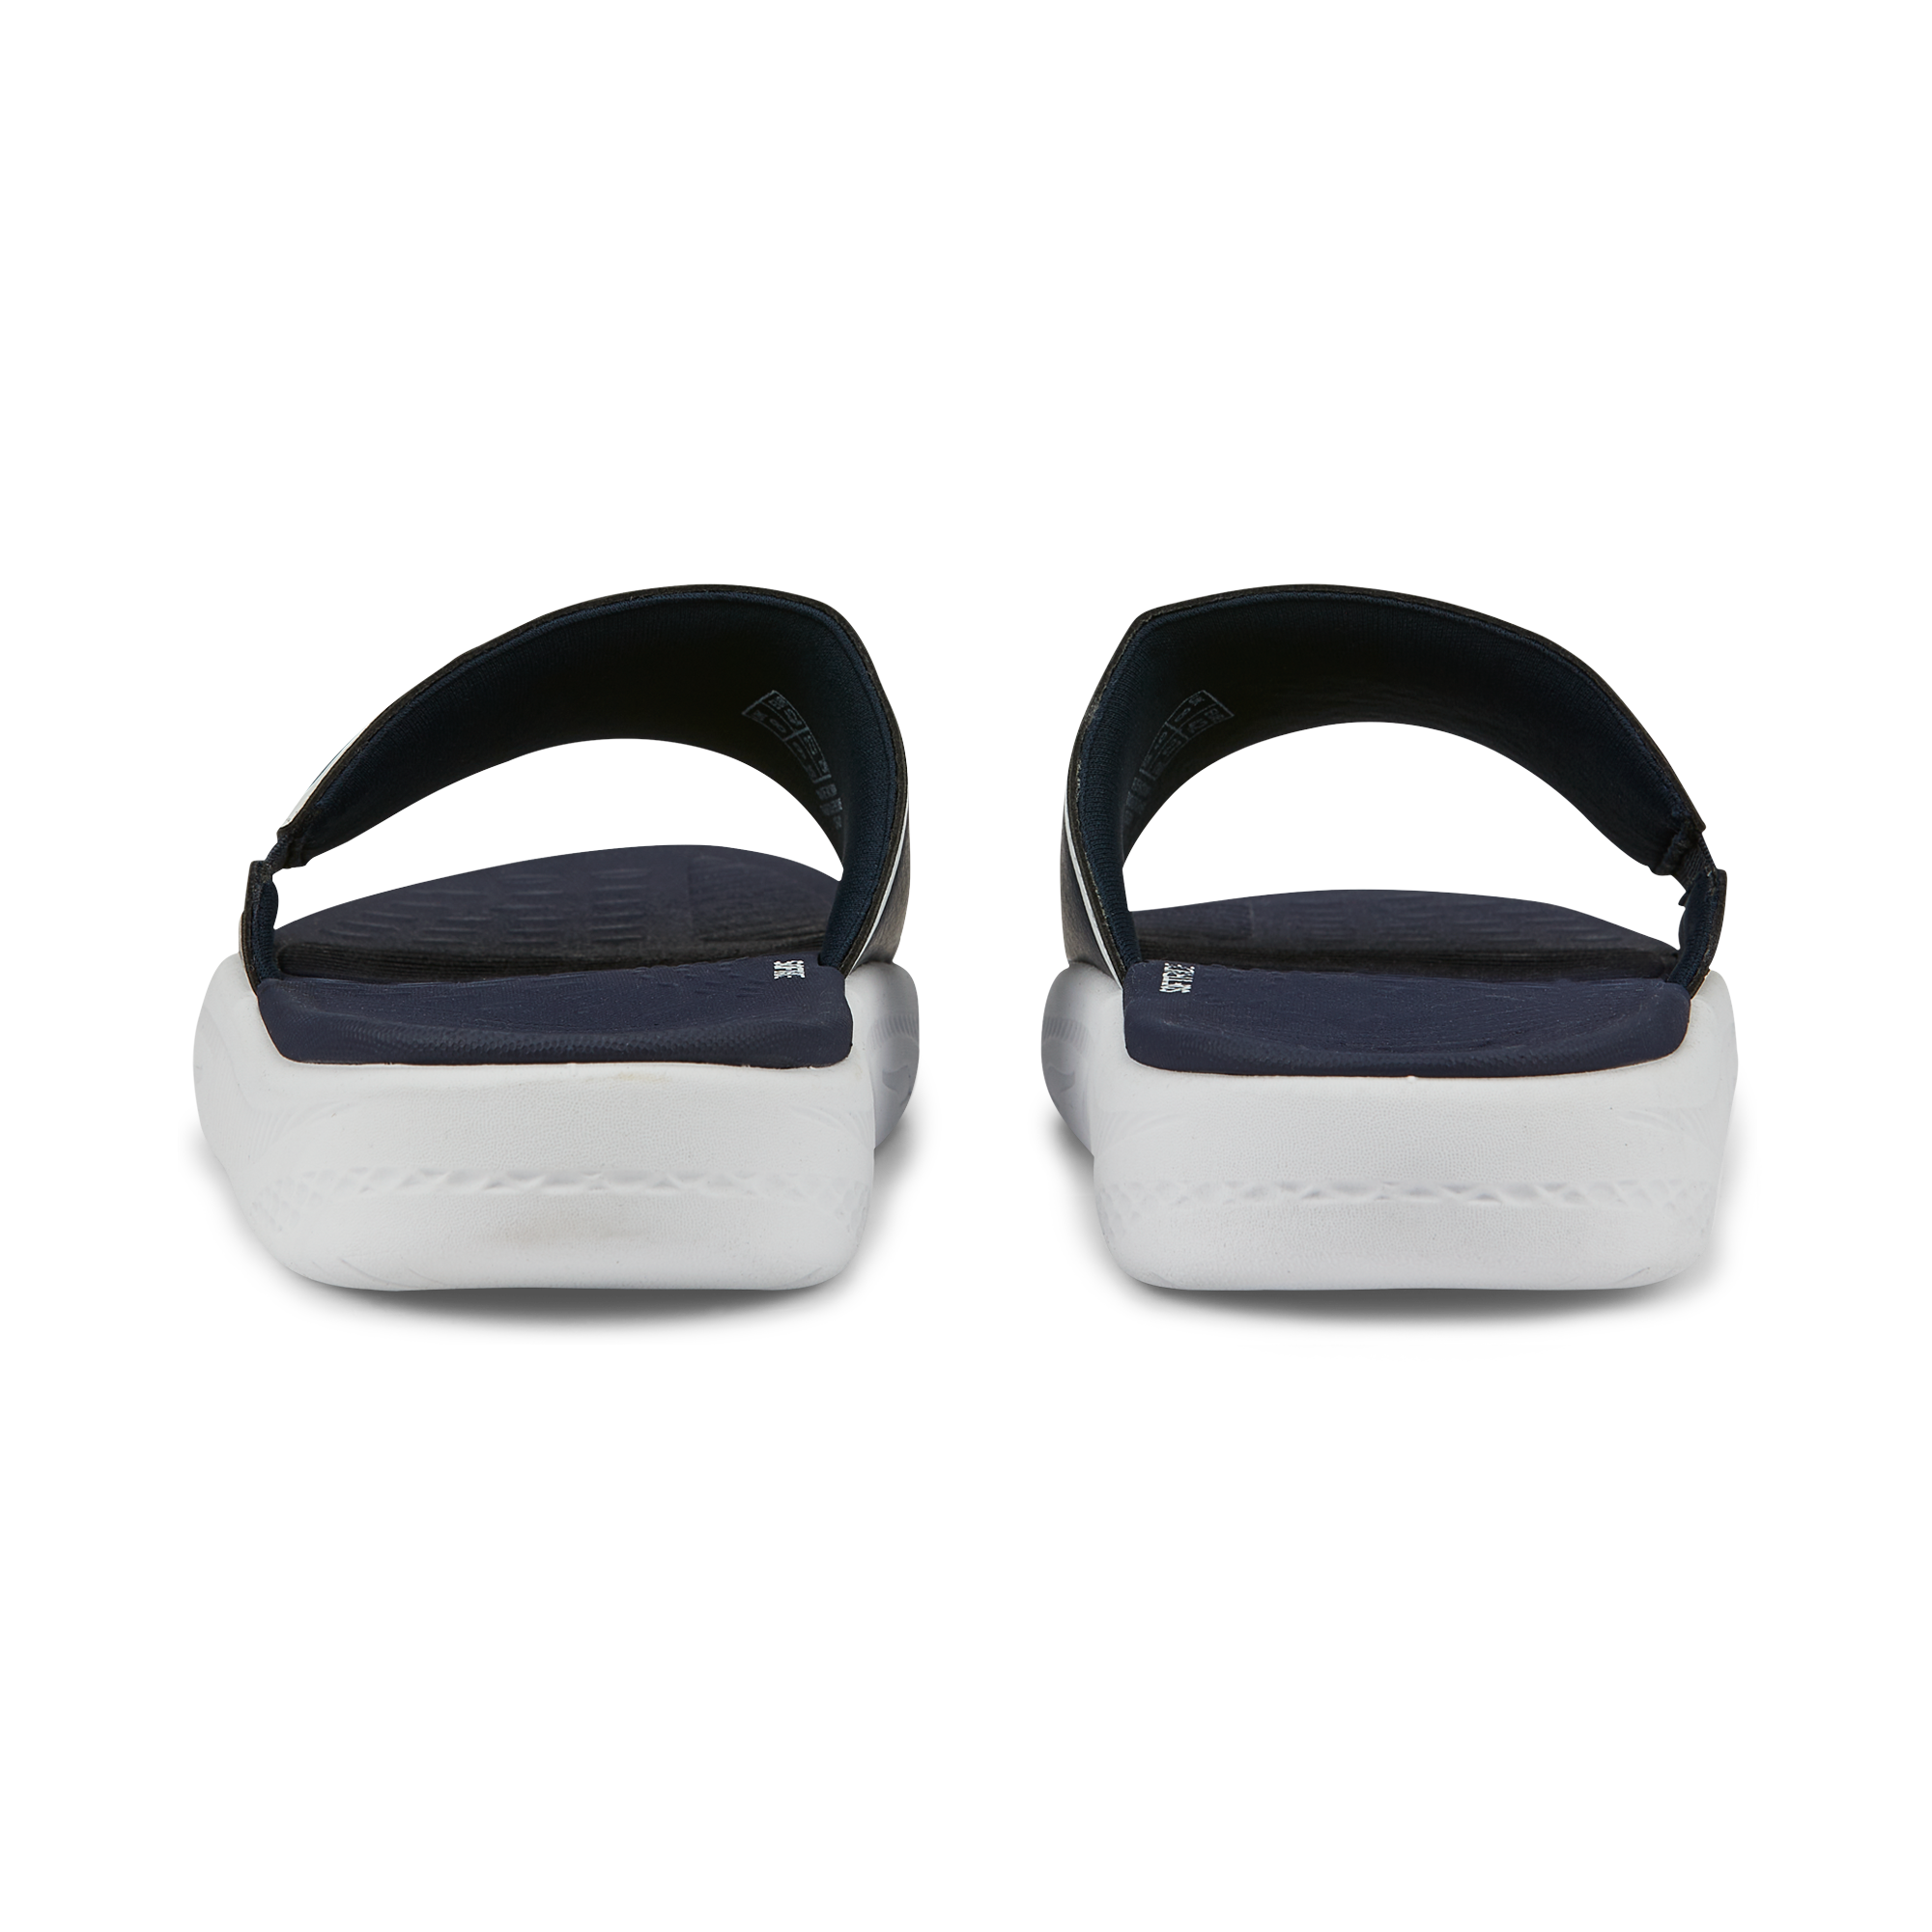 Puma X PTC GS-Softride Sandals